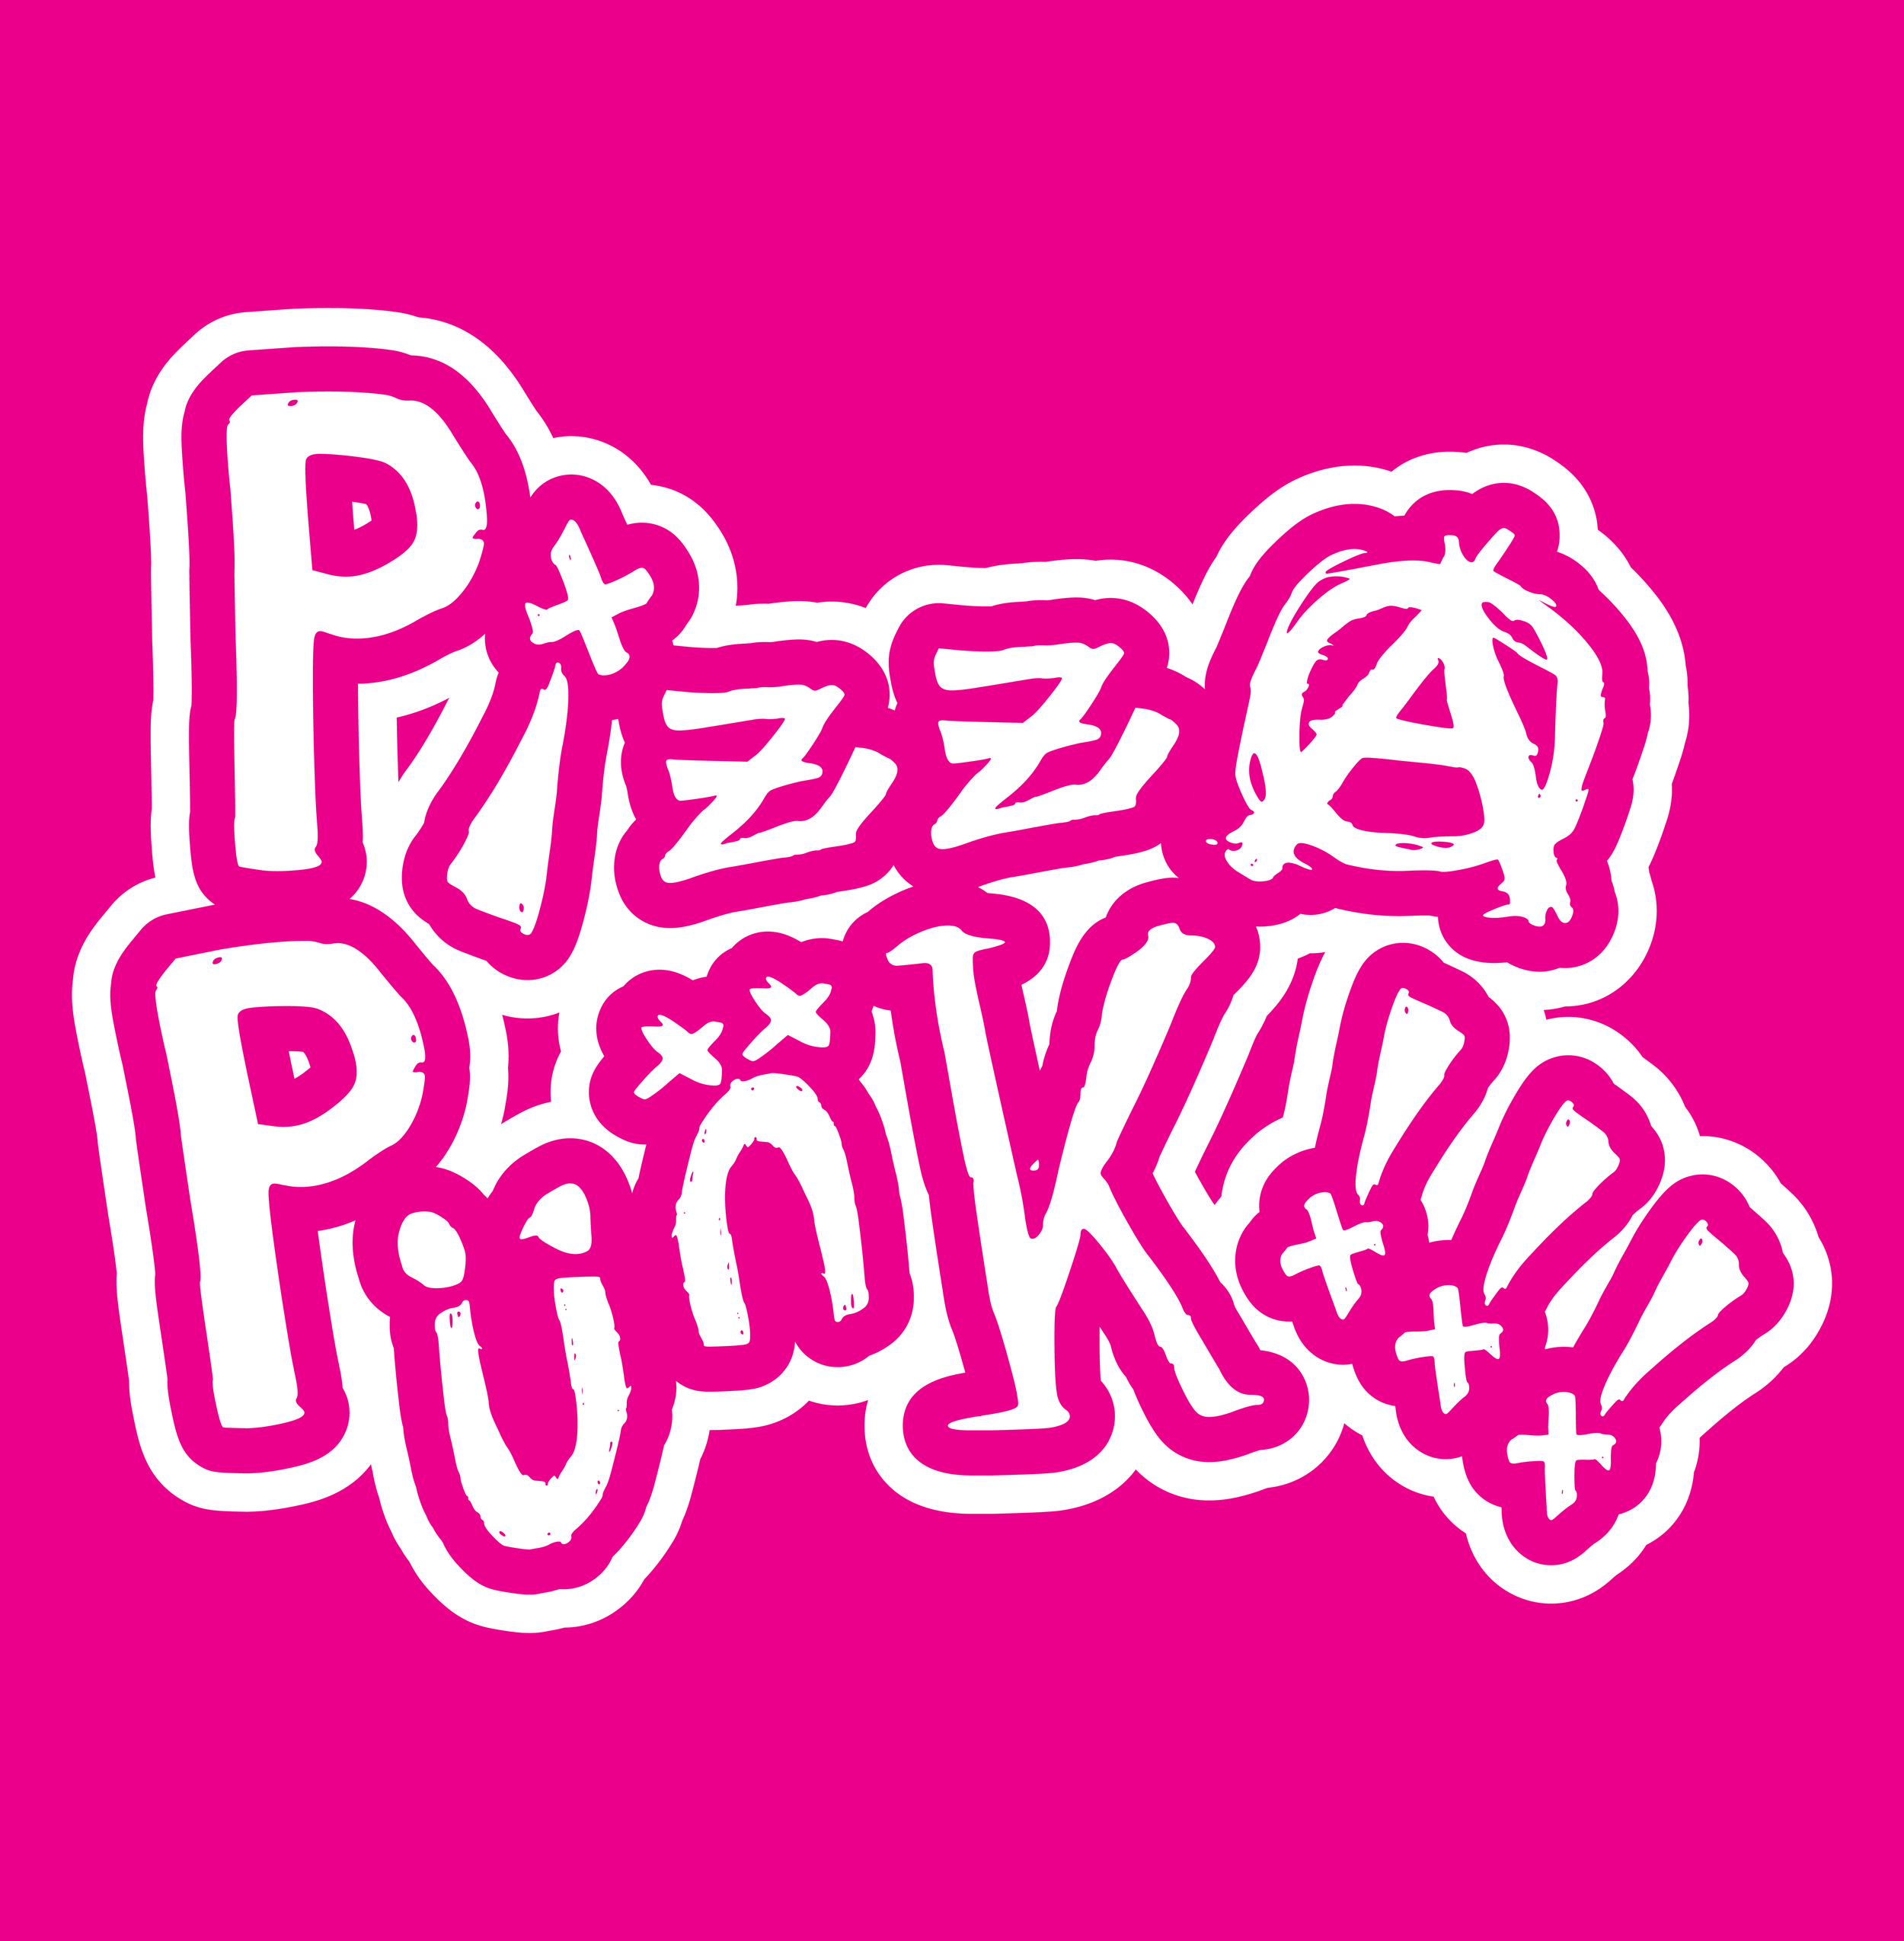 Pizza Punk